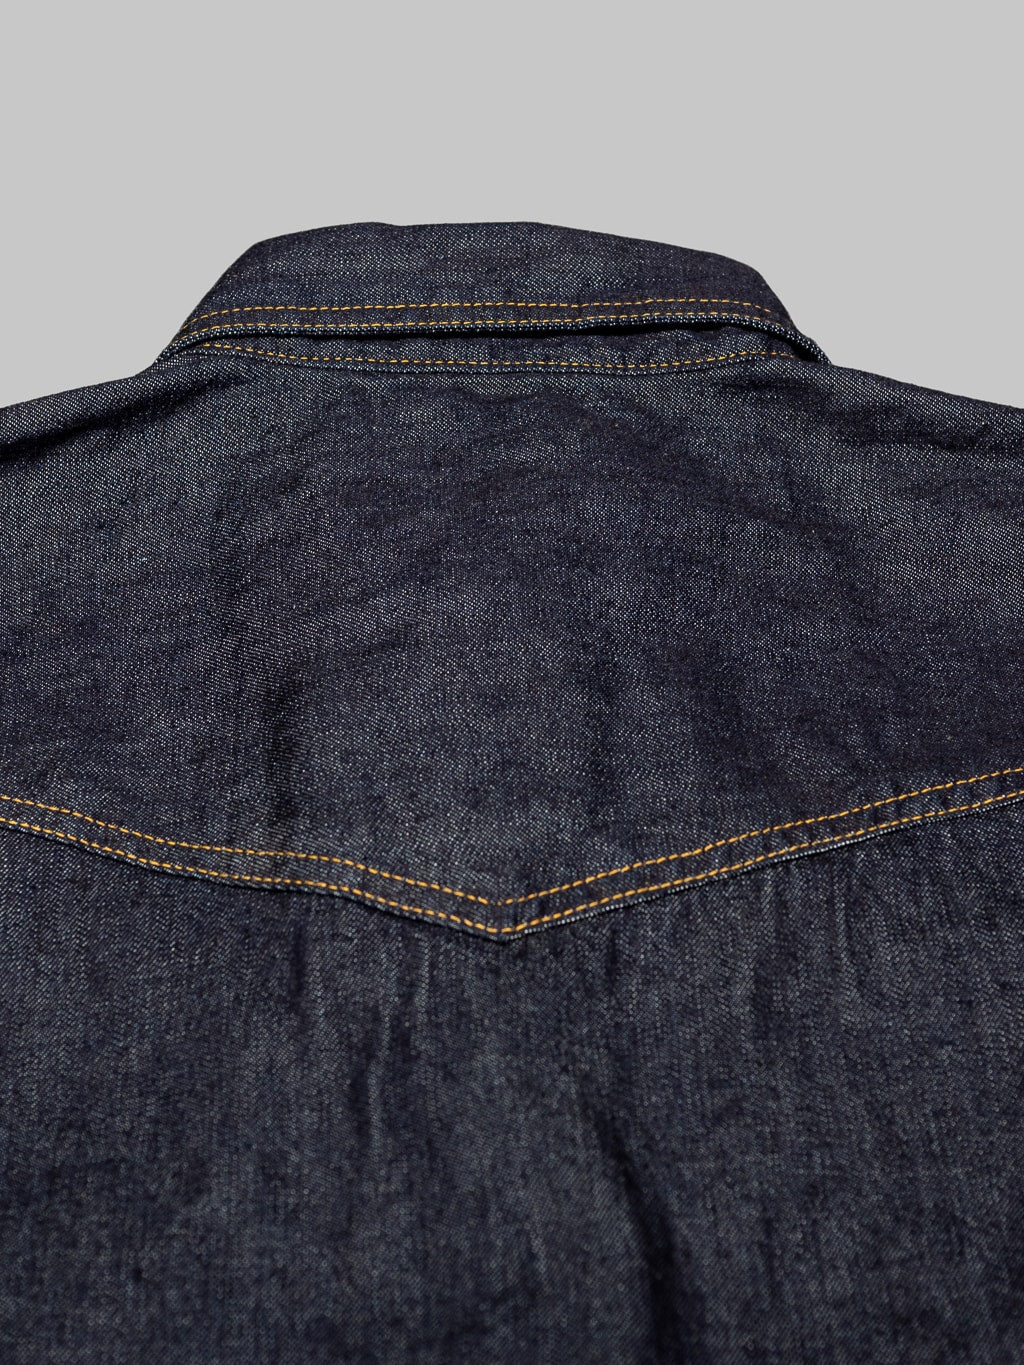 tcb jeans ranchman selvedge denim shirt back western style